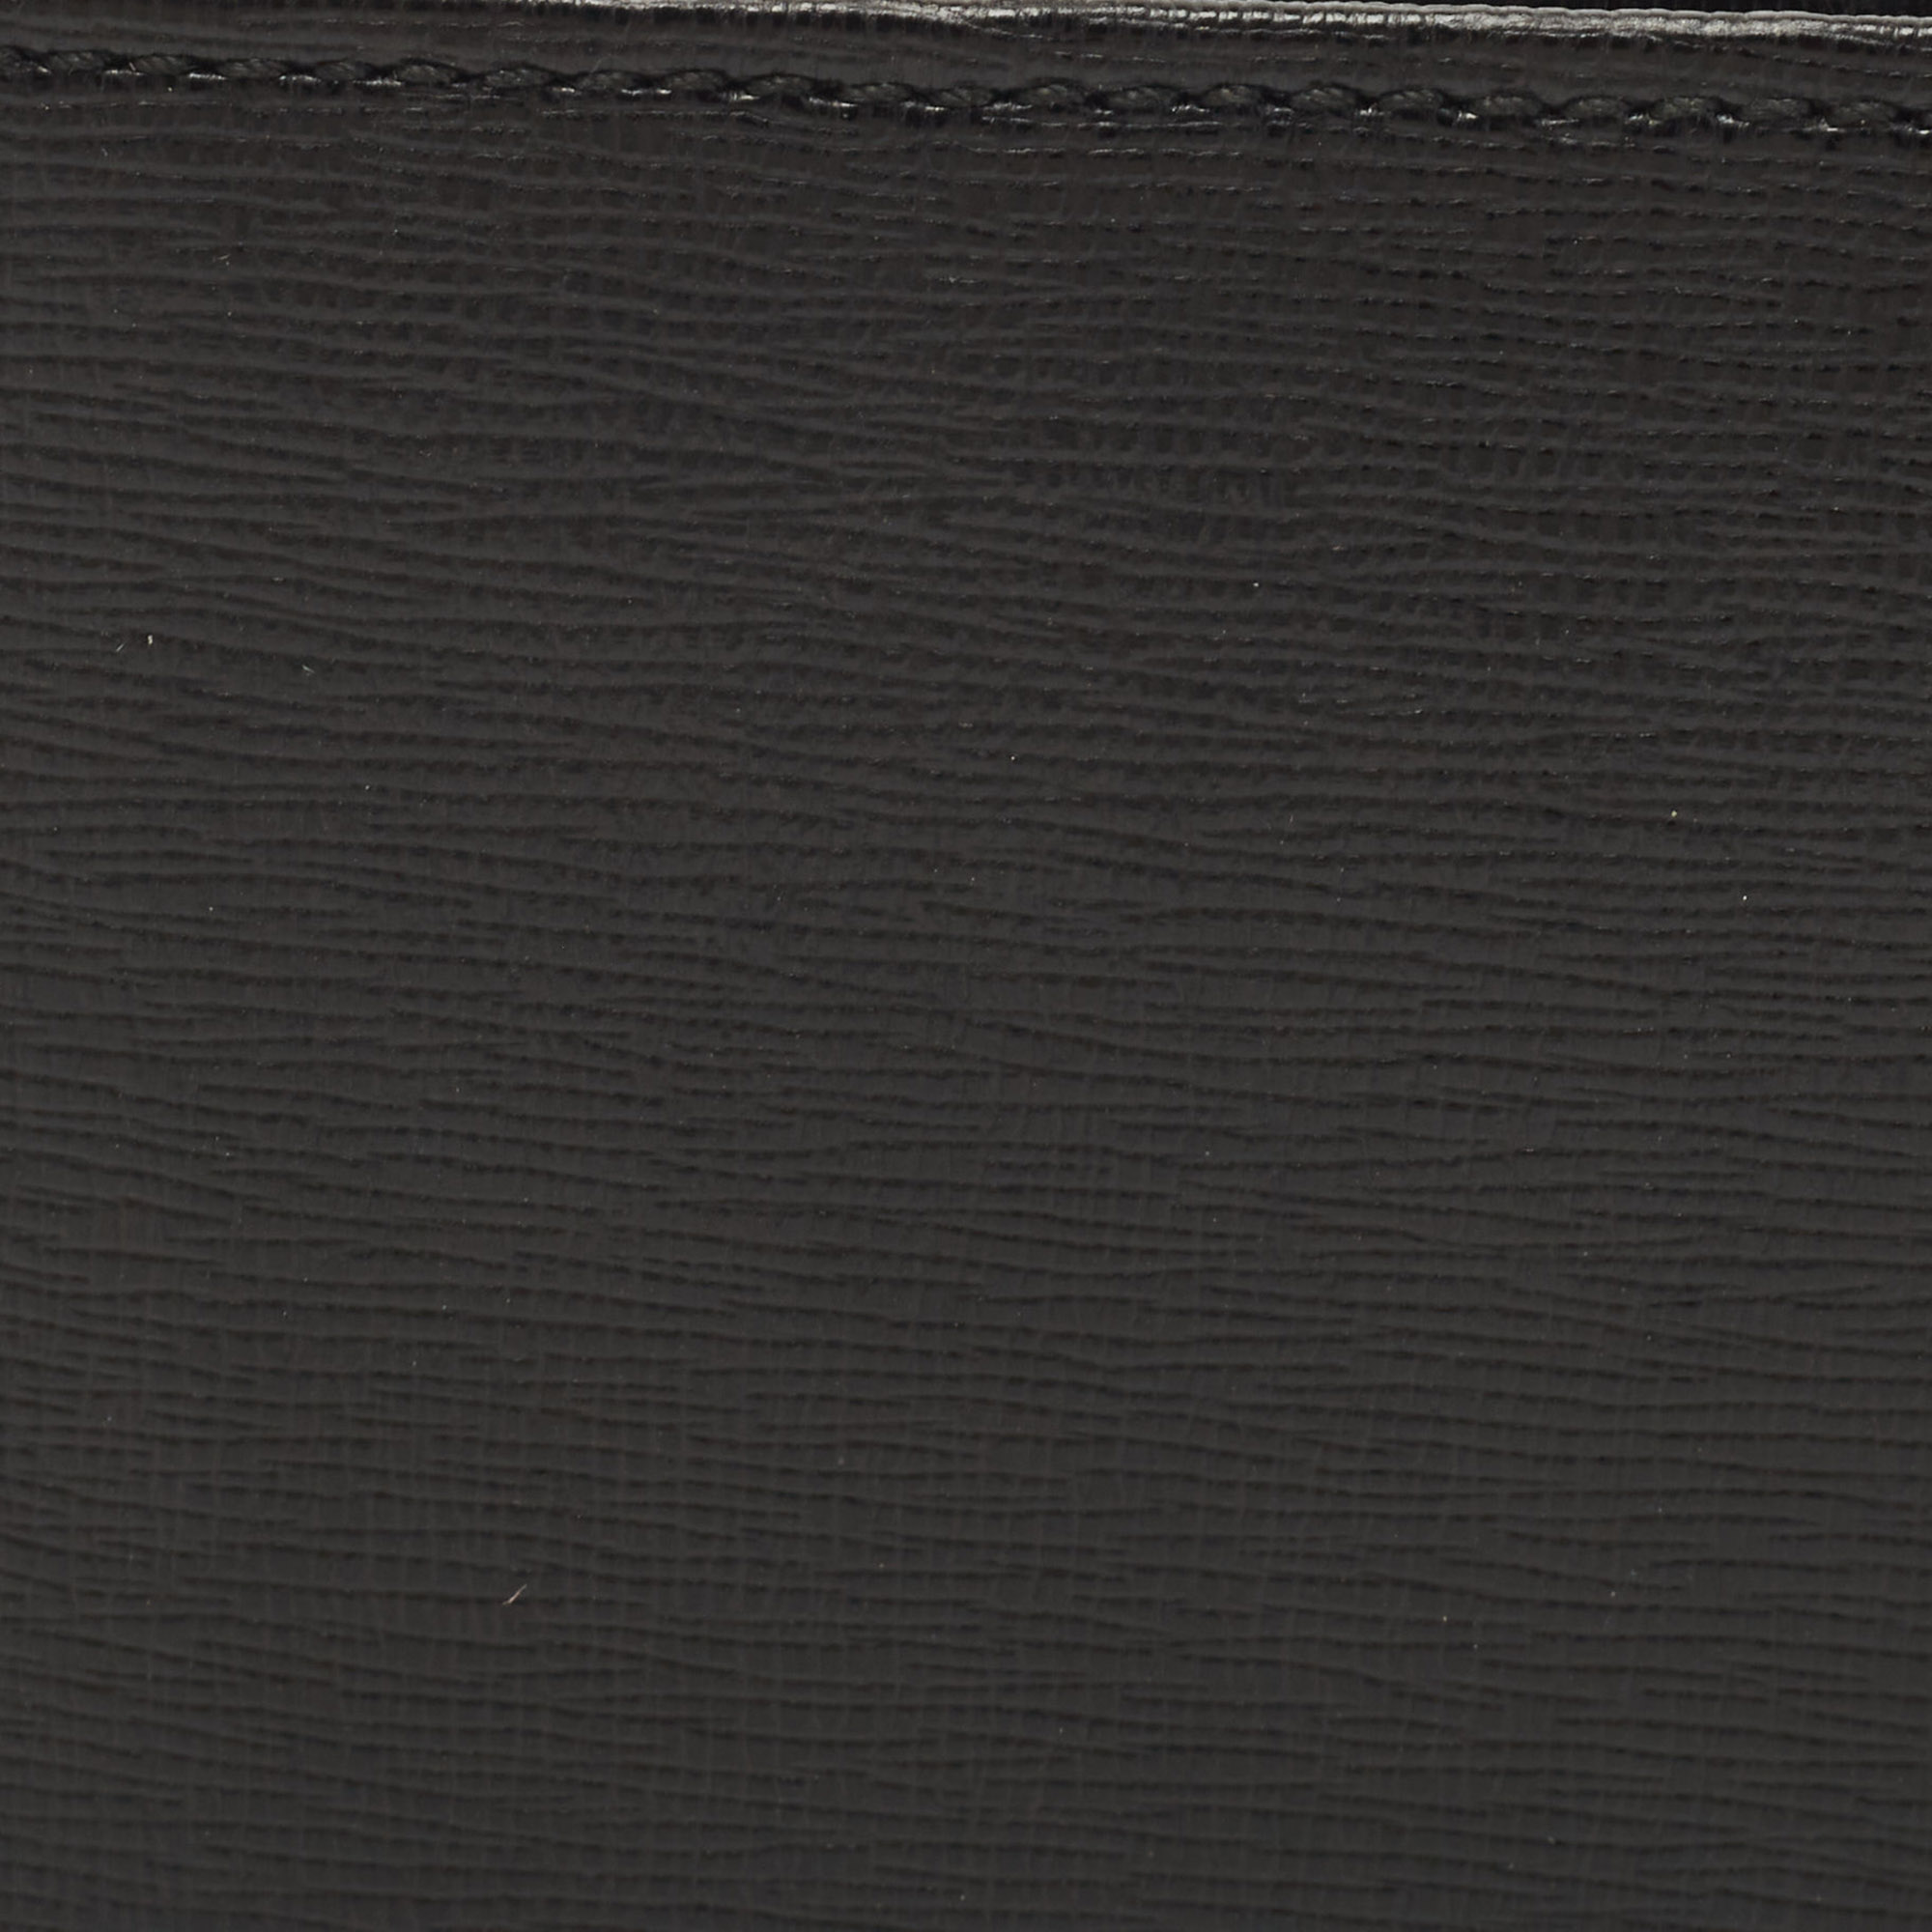 Giorgio Armani Black Leather Logo Bifold Wallet